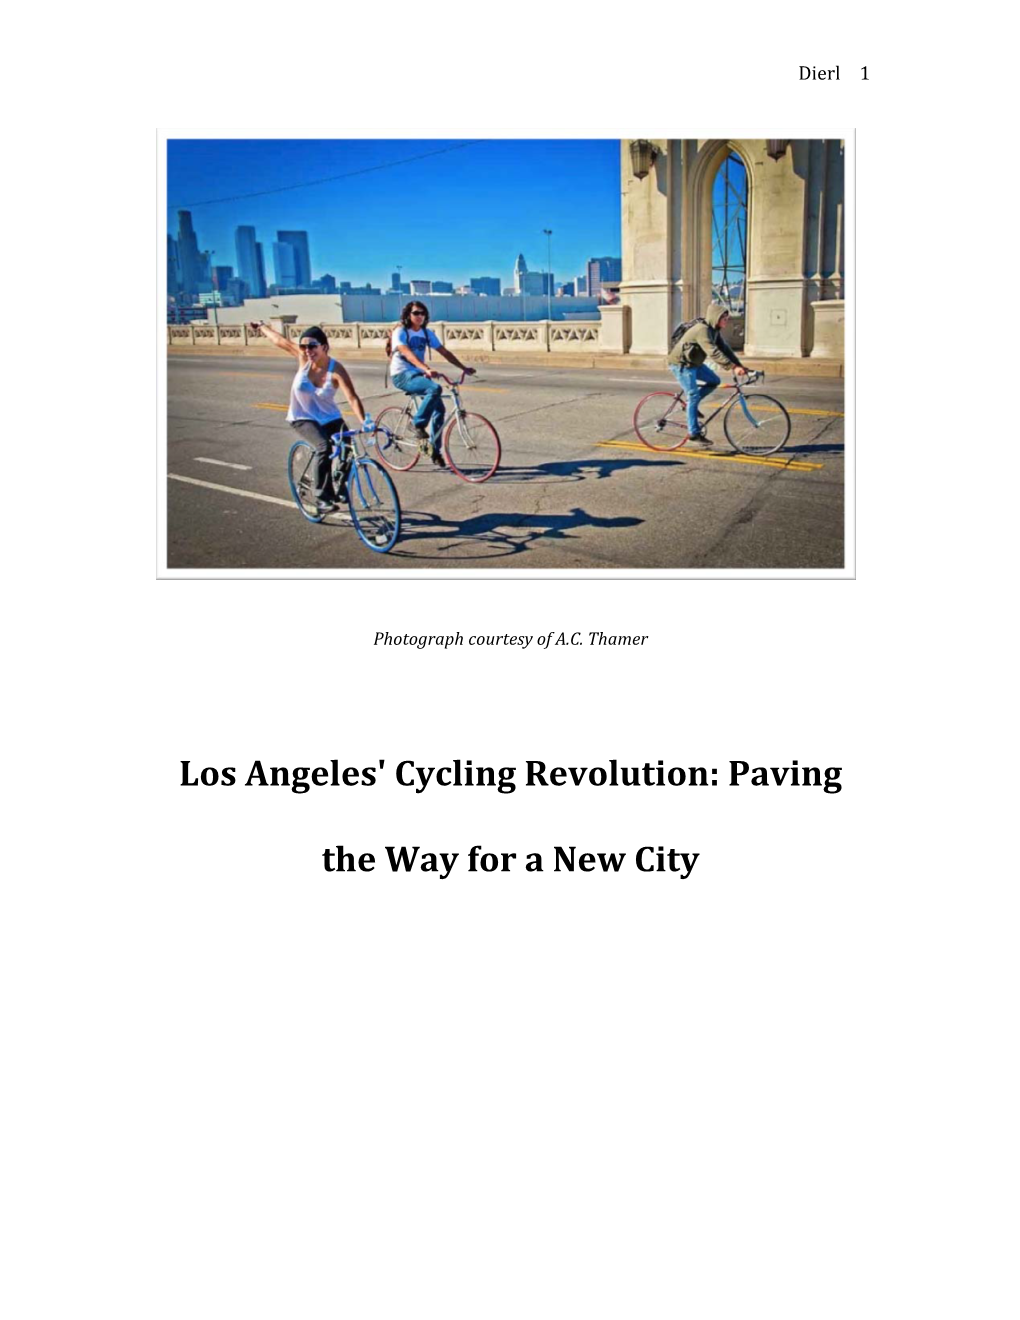 Los Angeles' Cycling Revolution: Paving